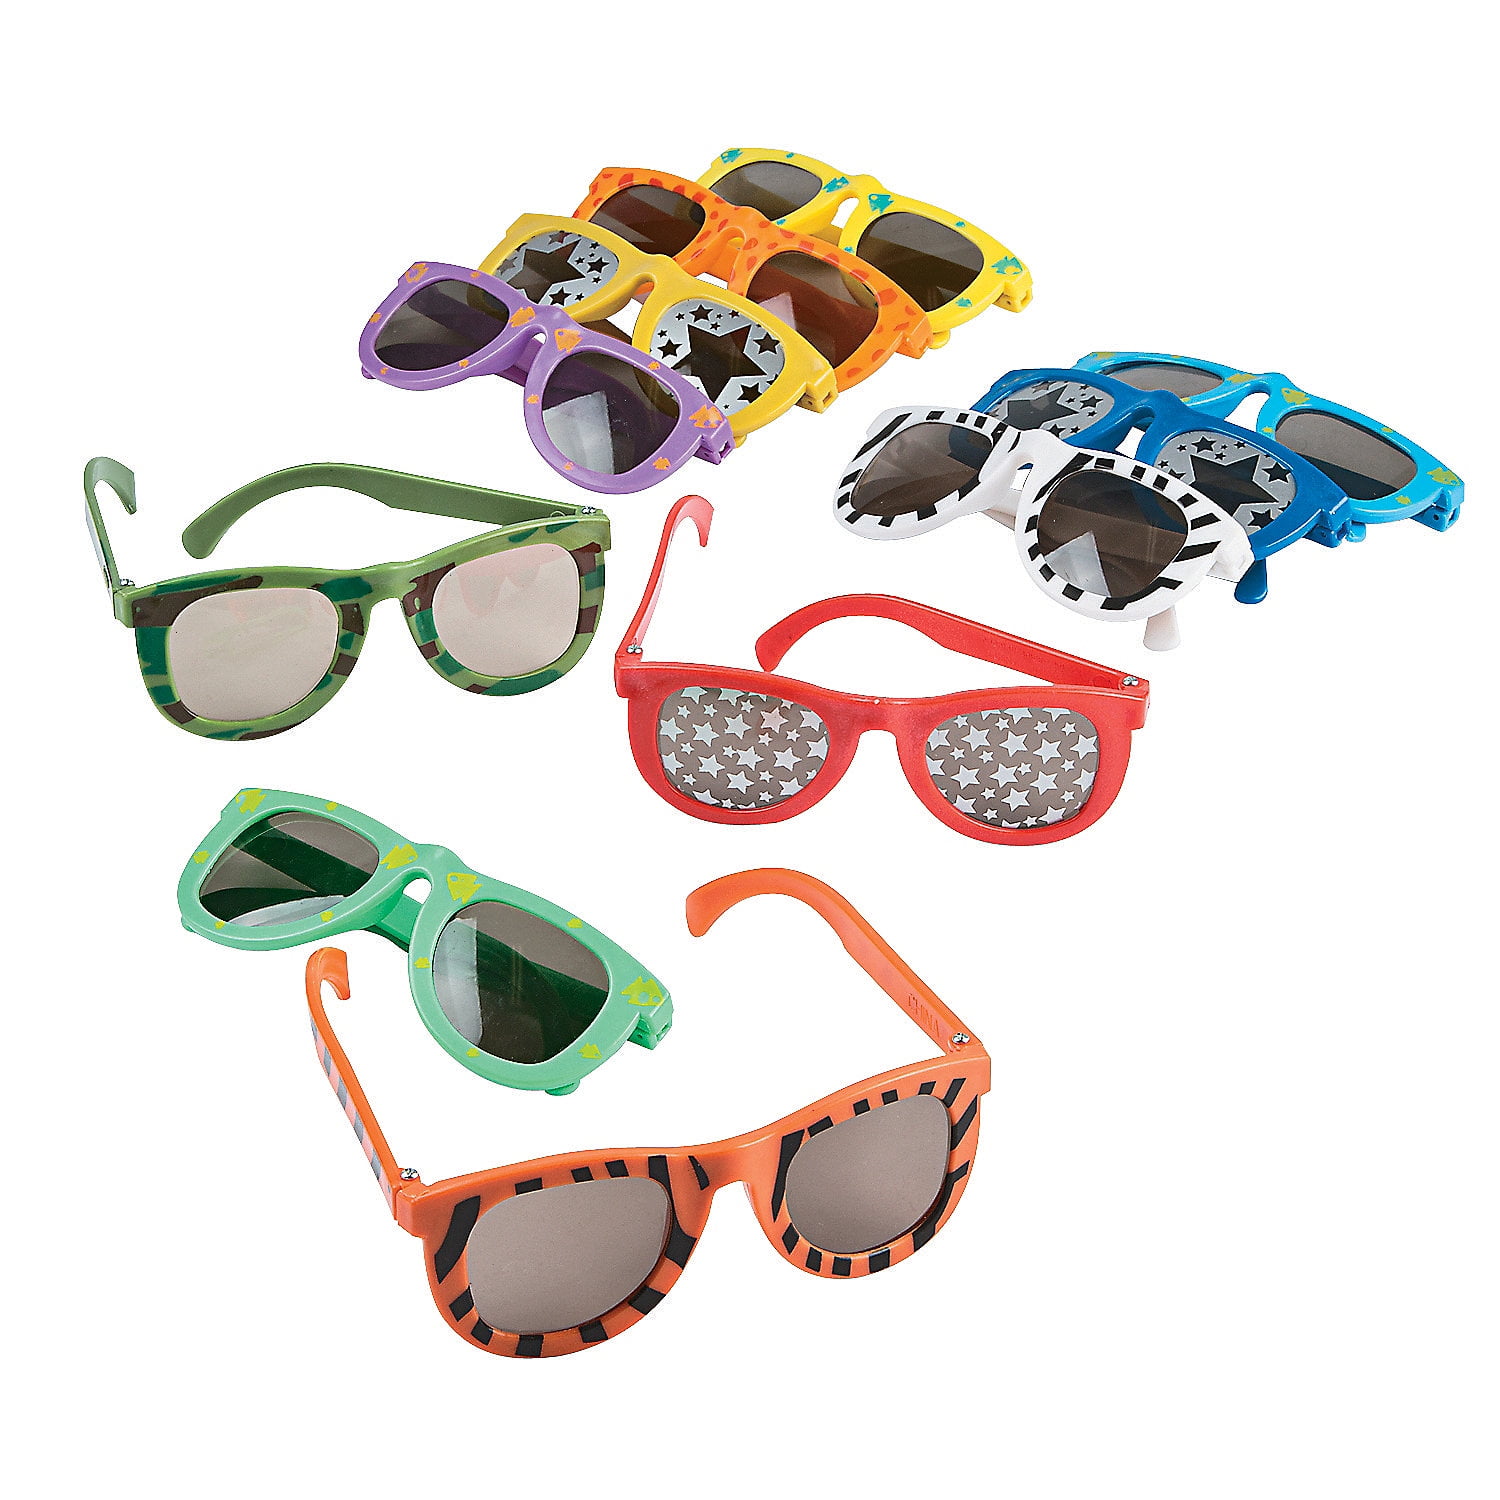 Kids Sunglasses Assortment (48Pc) - Apparel Accessories - 48 Pieces